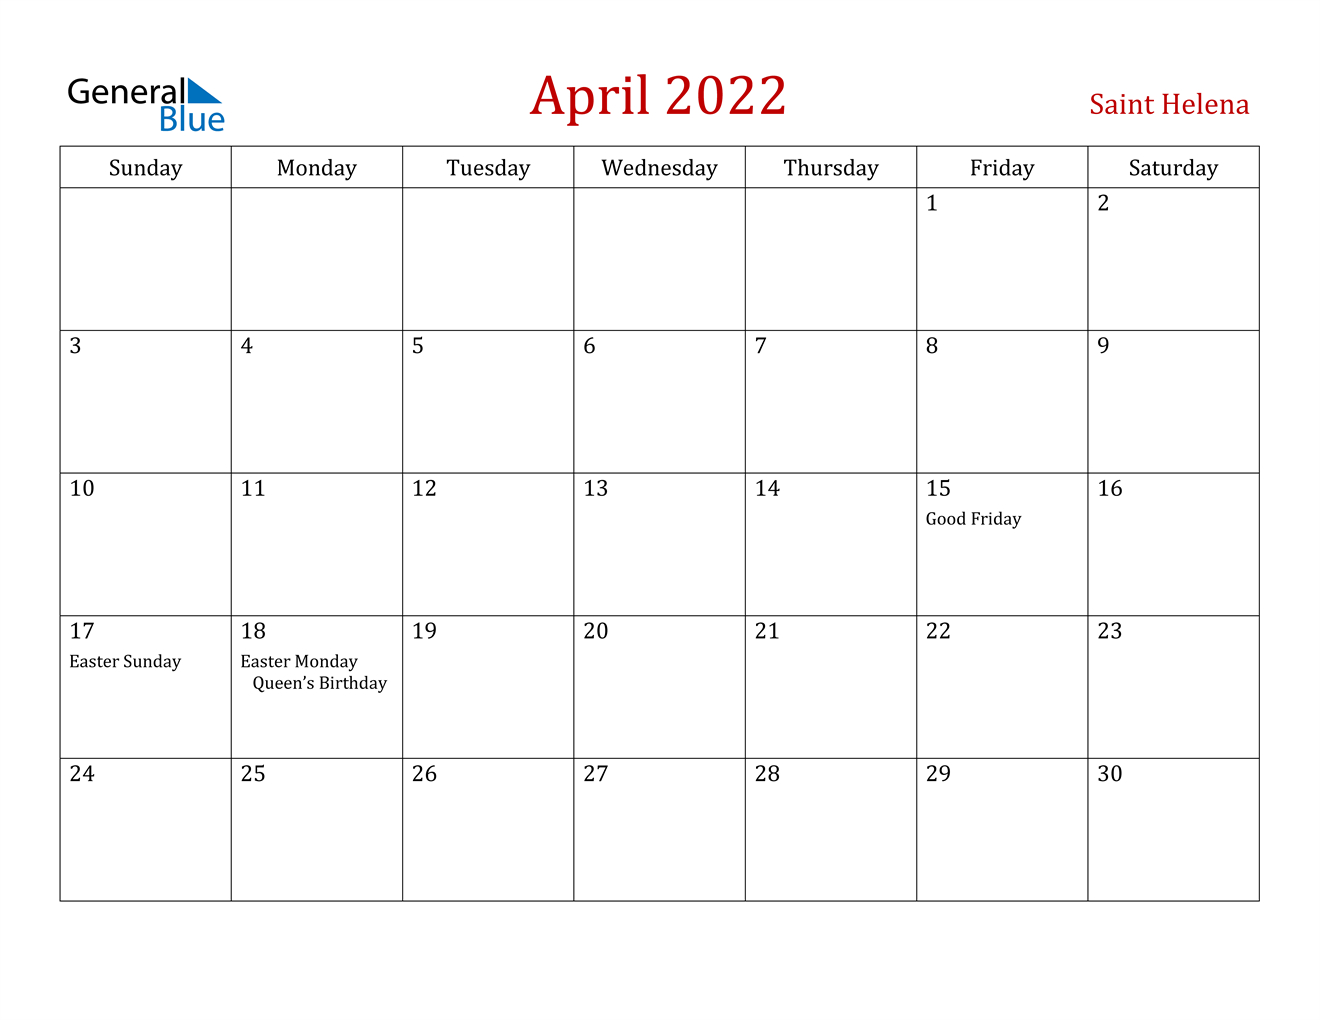 April 2022 Calendar - Saint Helena